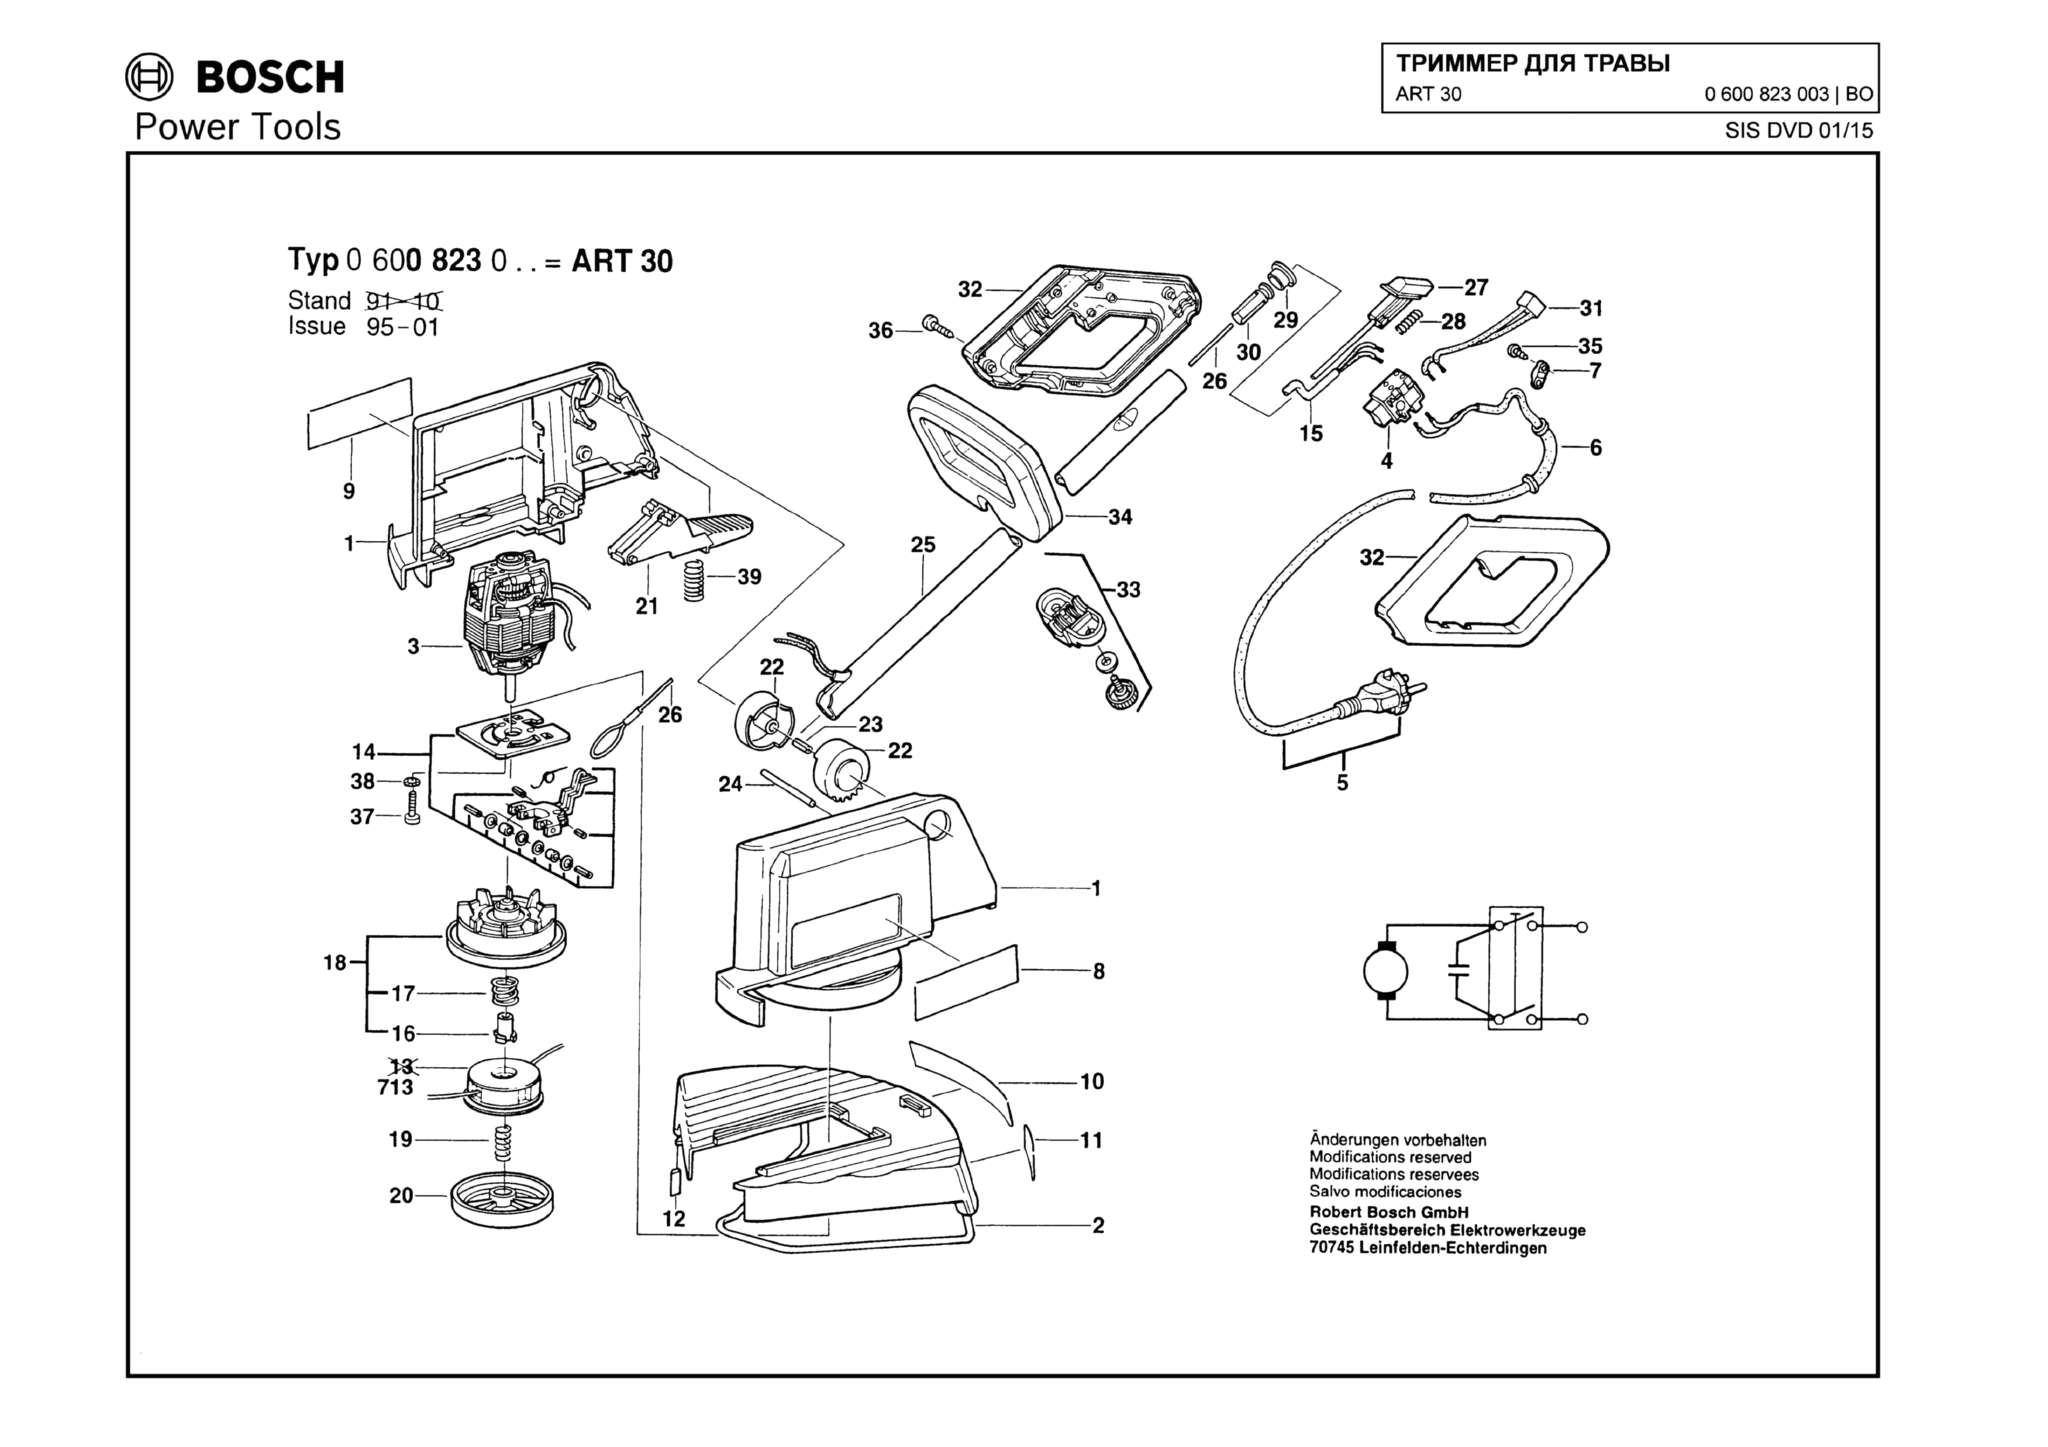 Запчасти, схема и деталировка Bosch ART 30 (ТИП 0600823003)